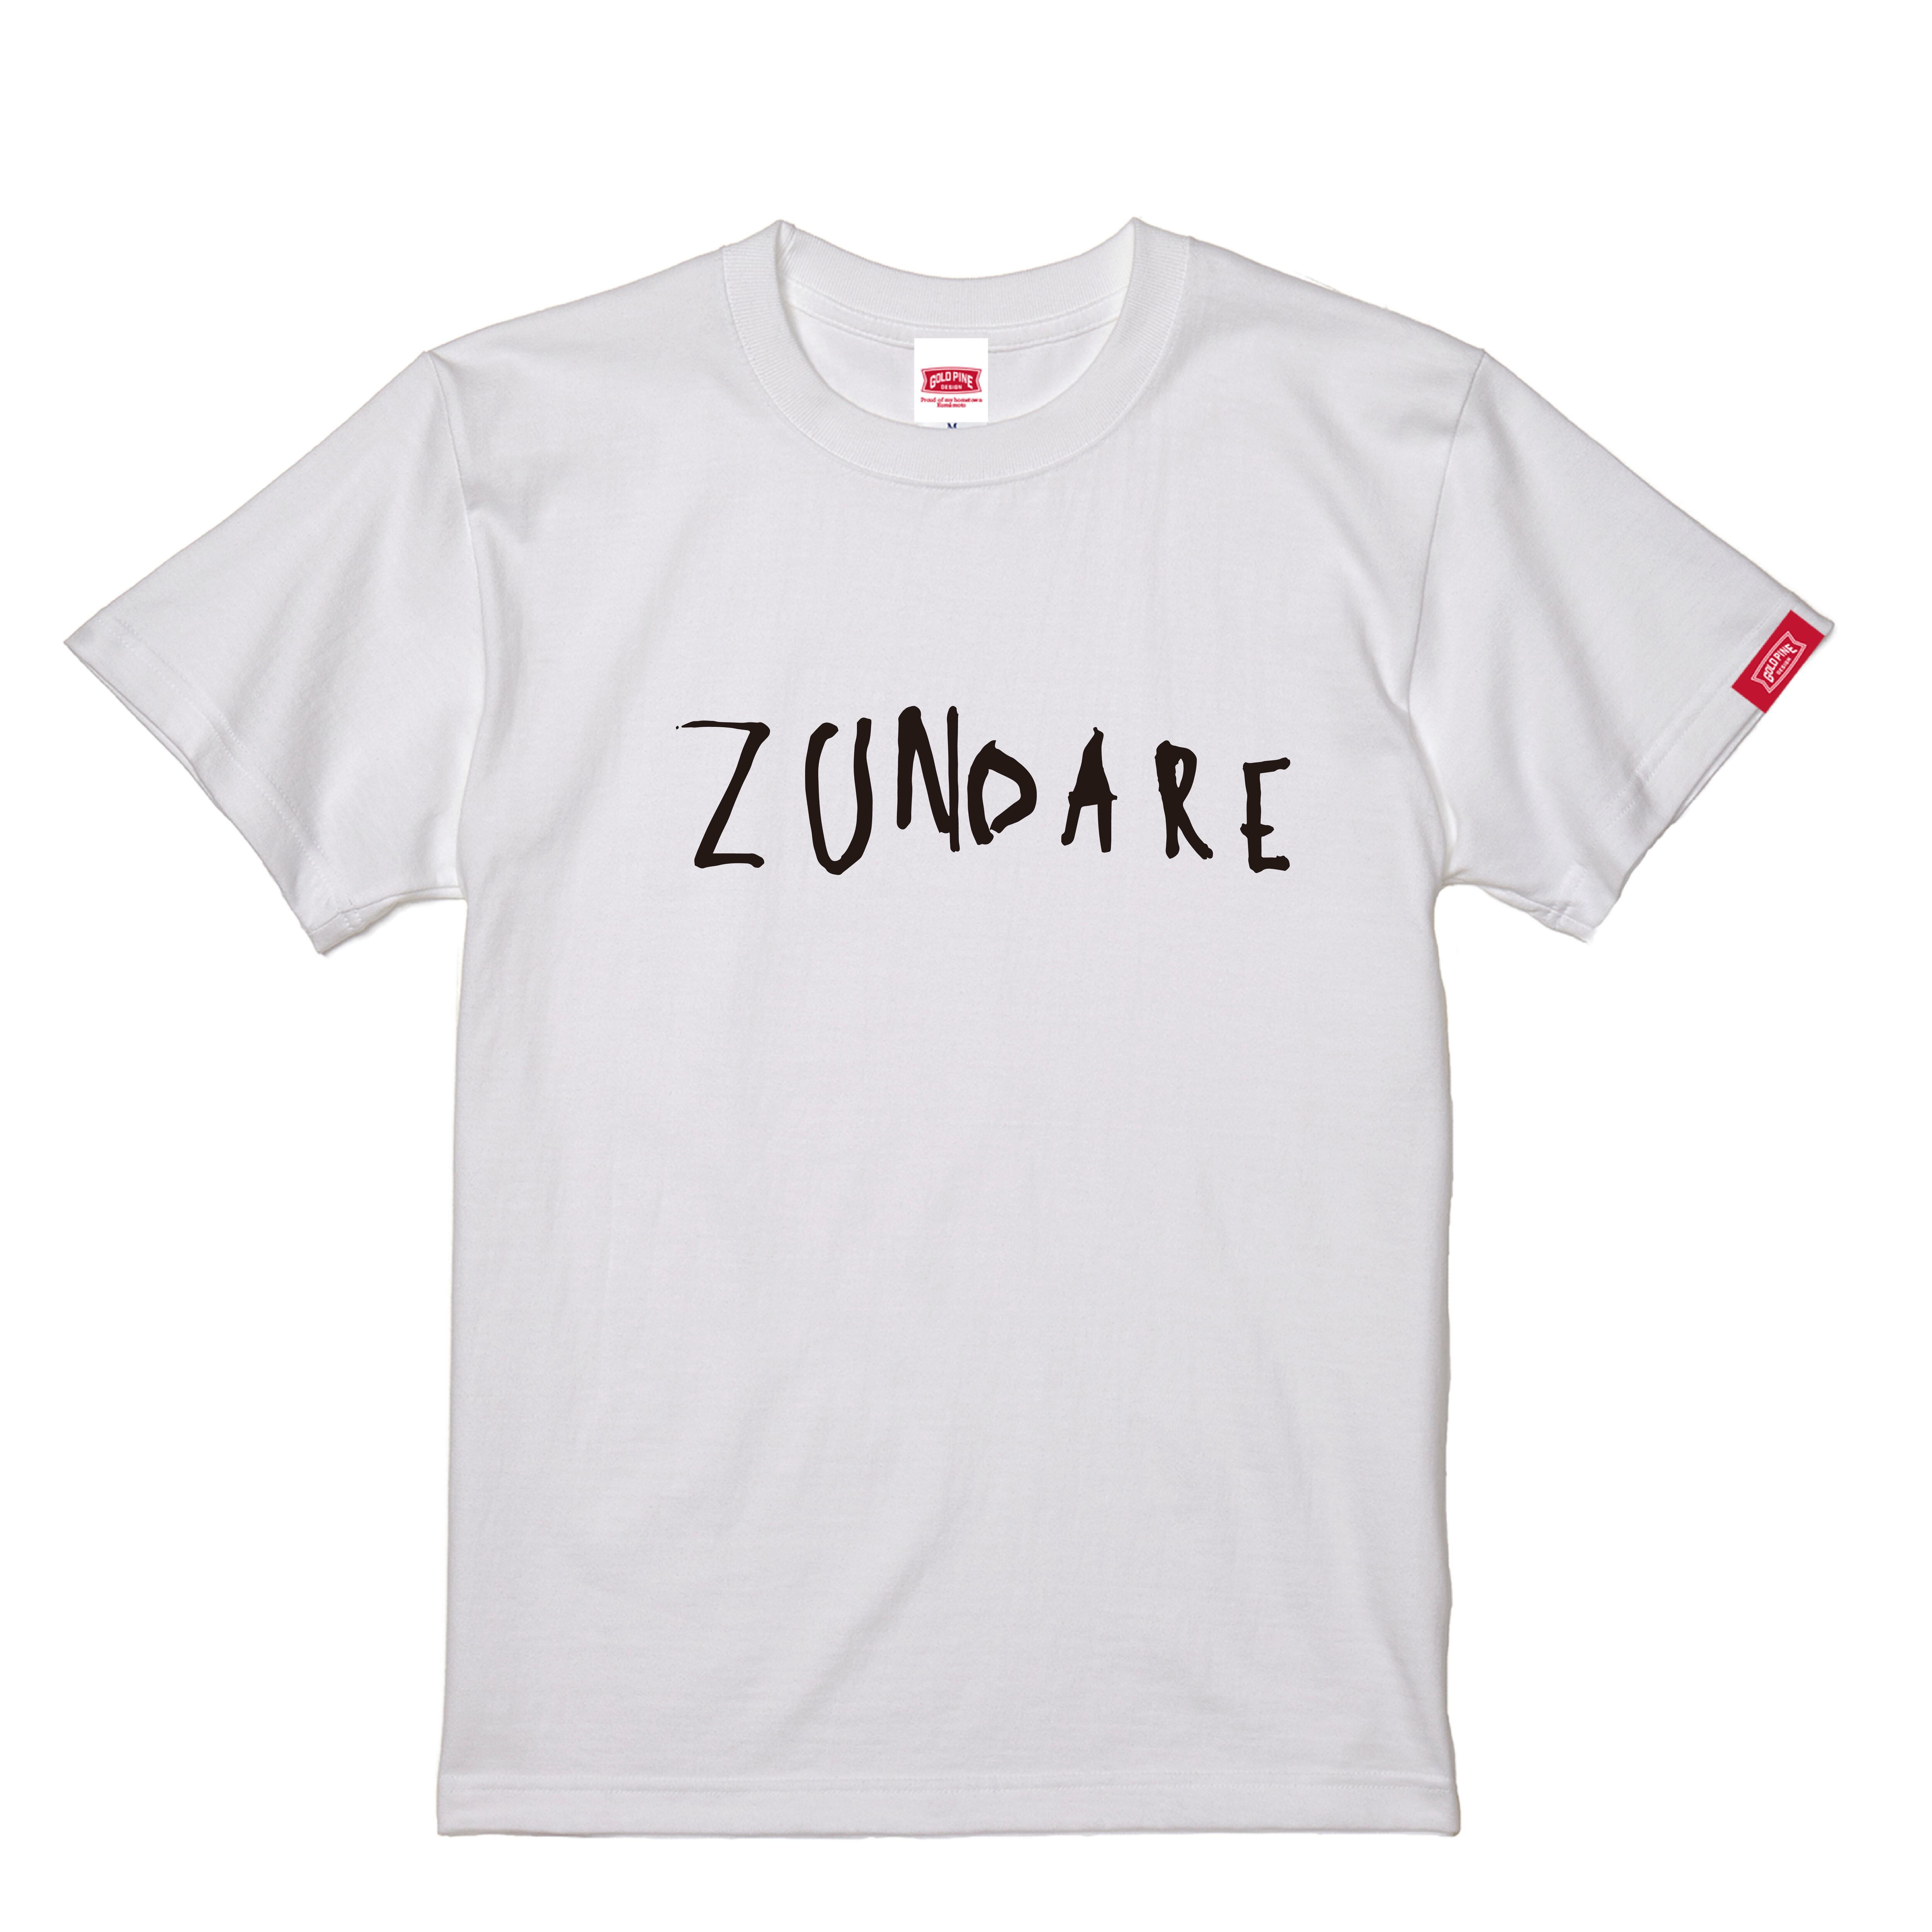 ZUNDARE-Tshirt【Adult】White